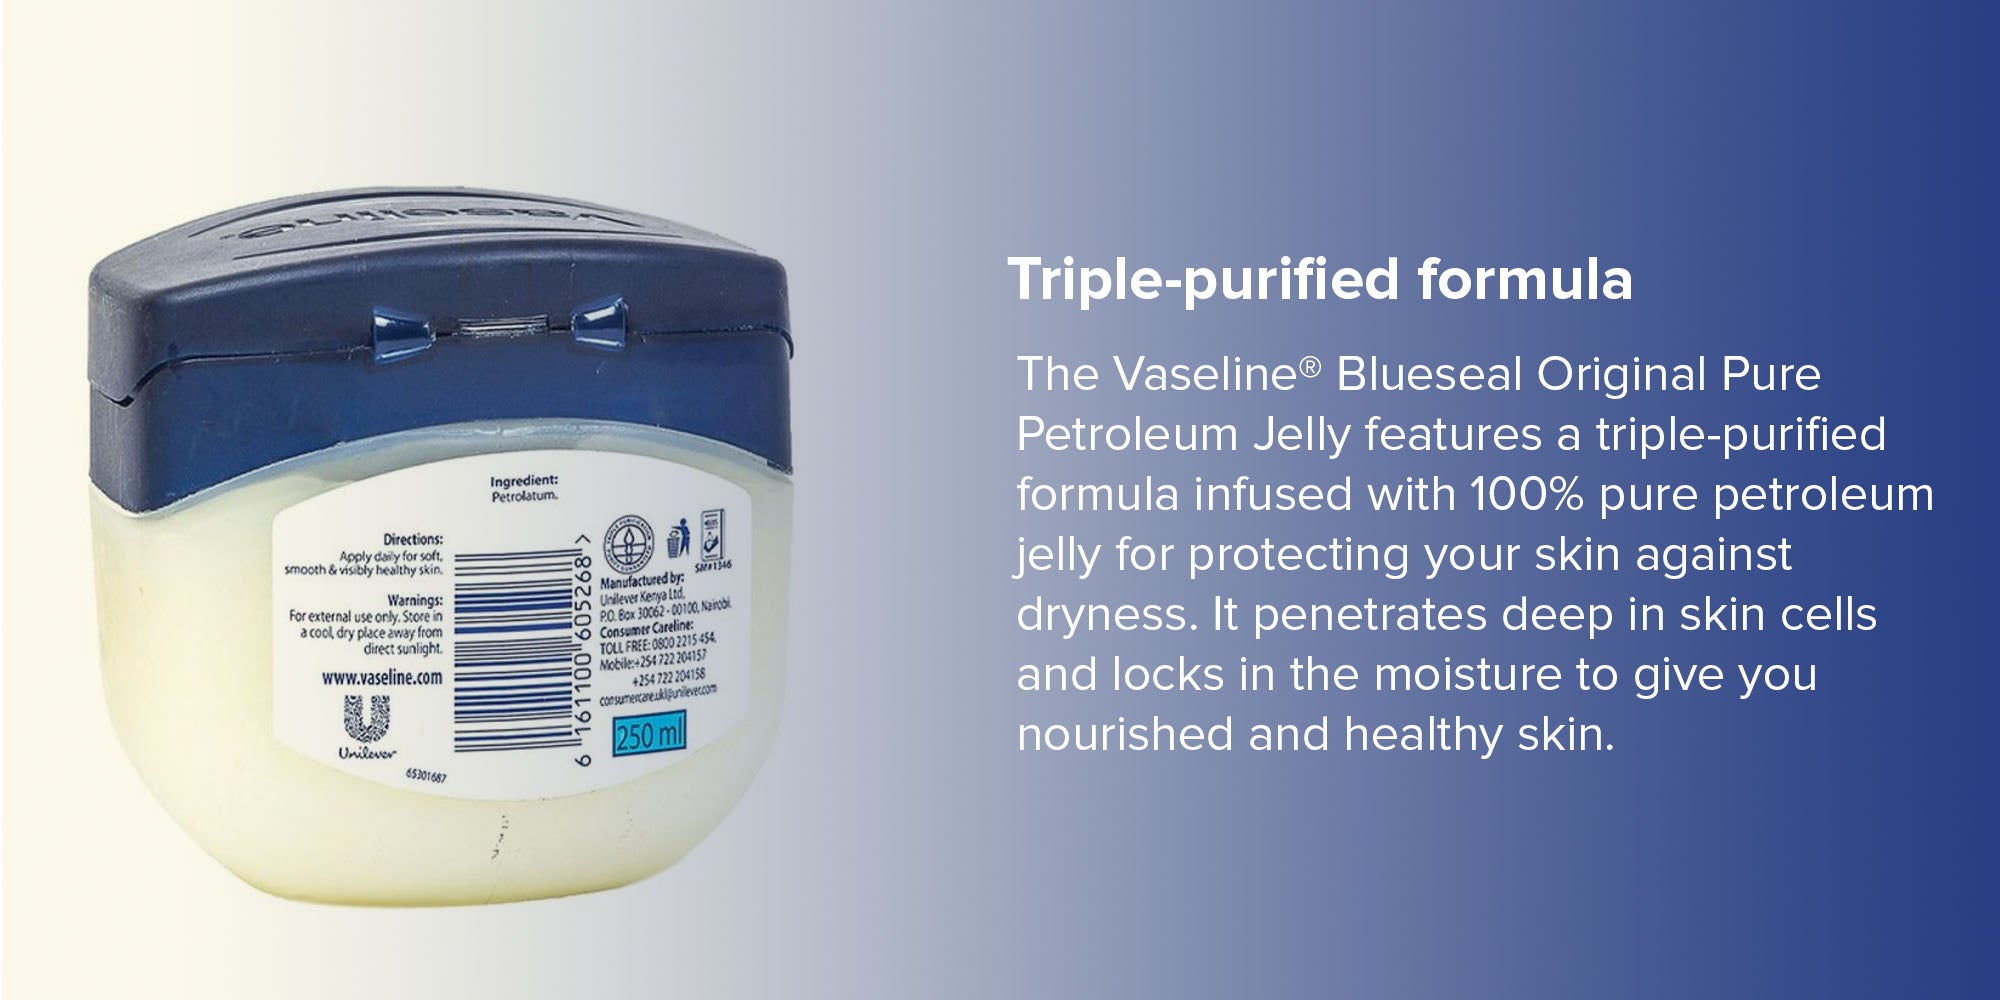 Vaseline Pure Petroleum Jelly, Original, 250 mL Ingredients and